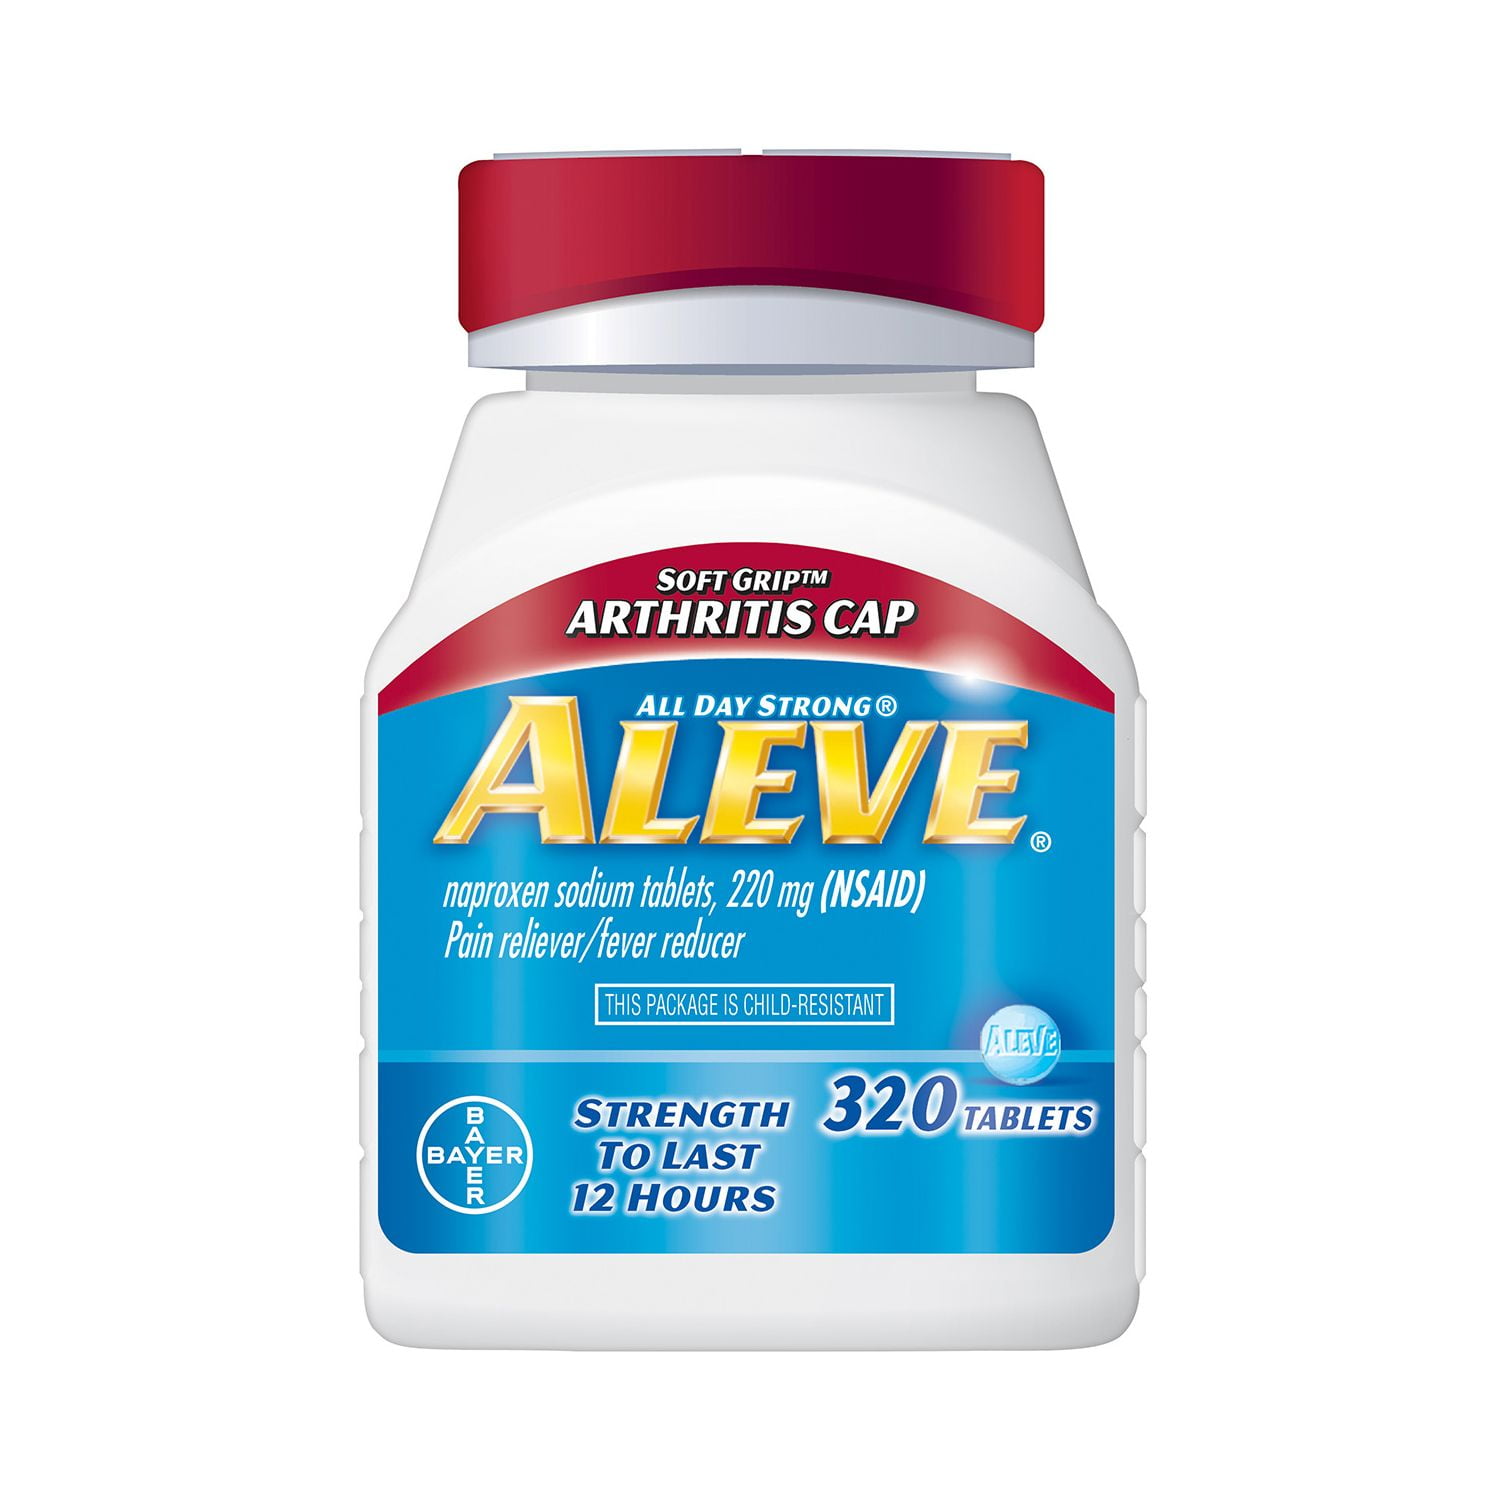 aleve-pain-reliever-tablets-arthritis-cap-320-count-walmart